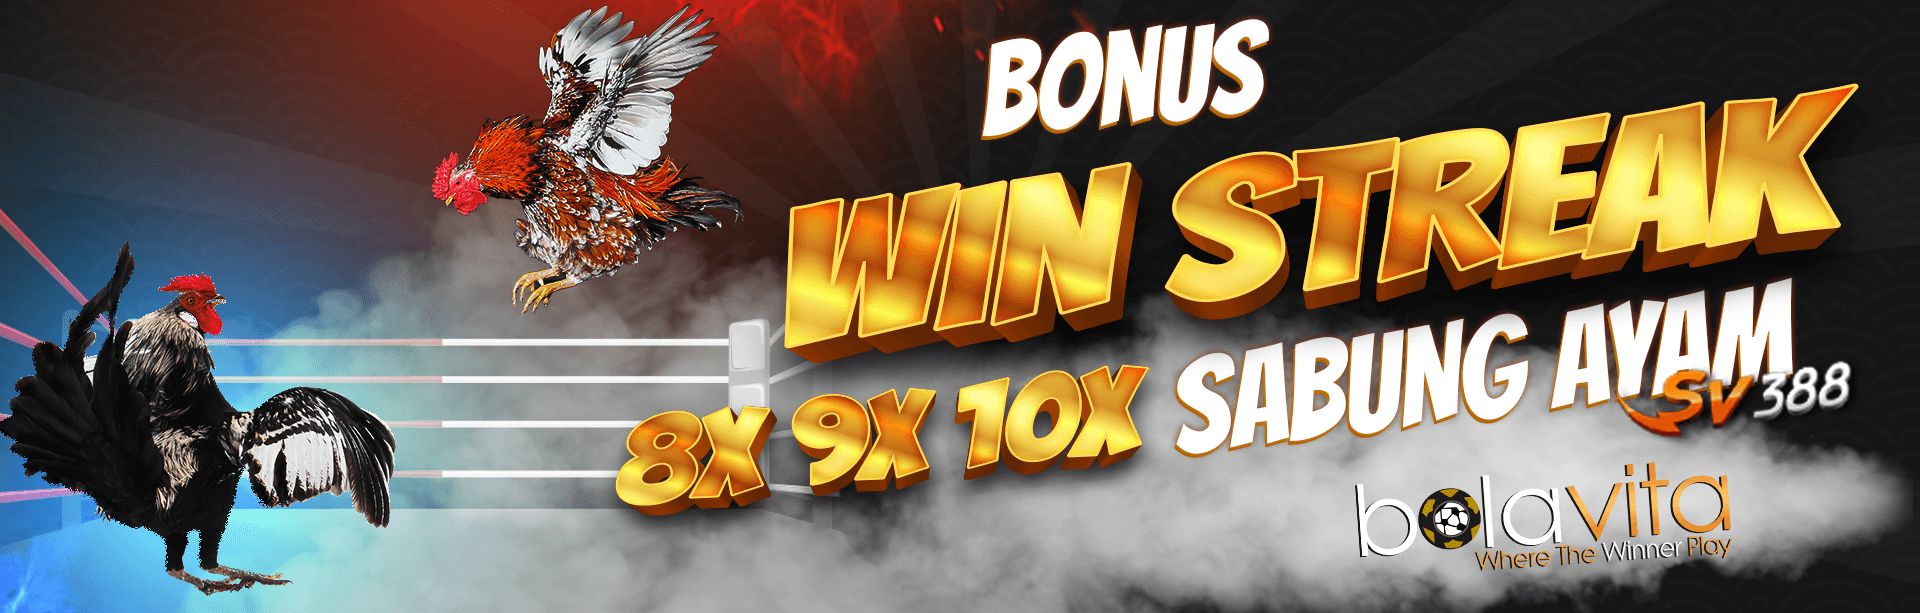 Bonus 8x 9x 10x Win Sabung Ayam Online